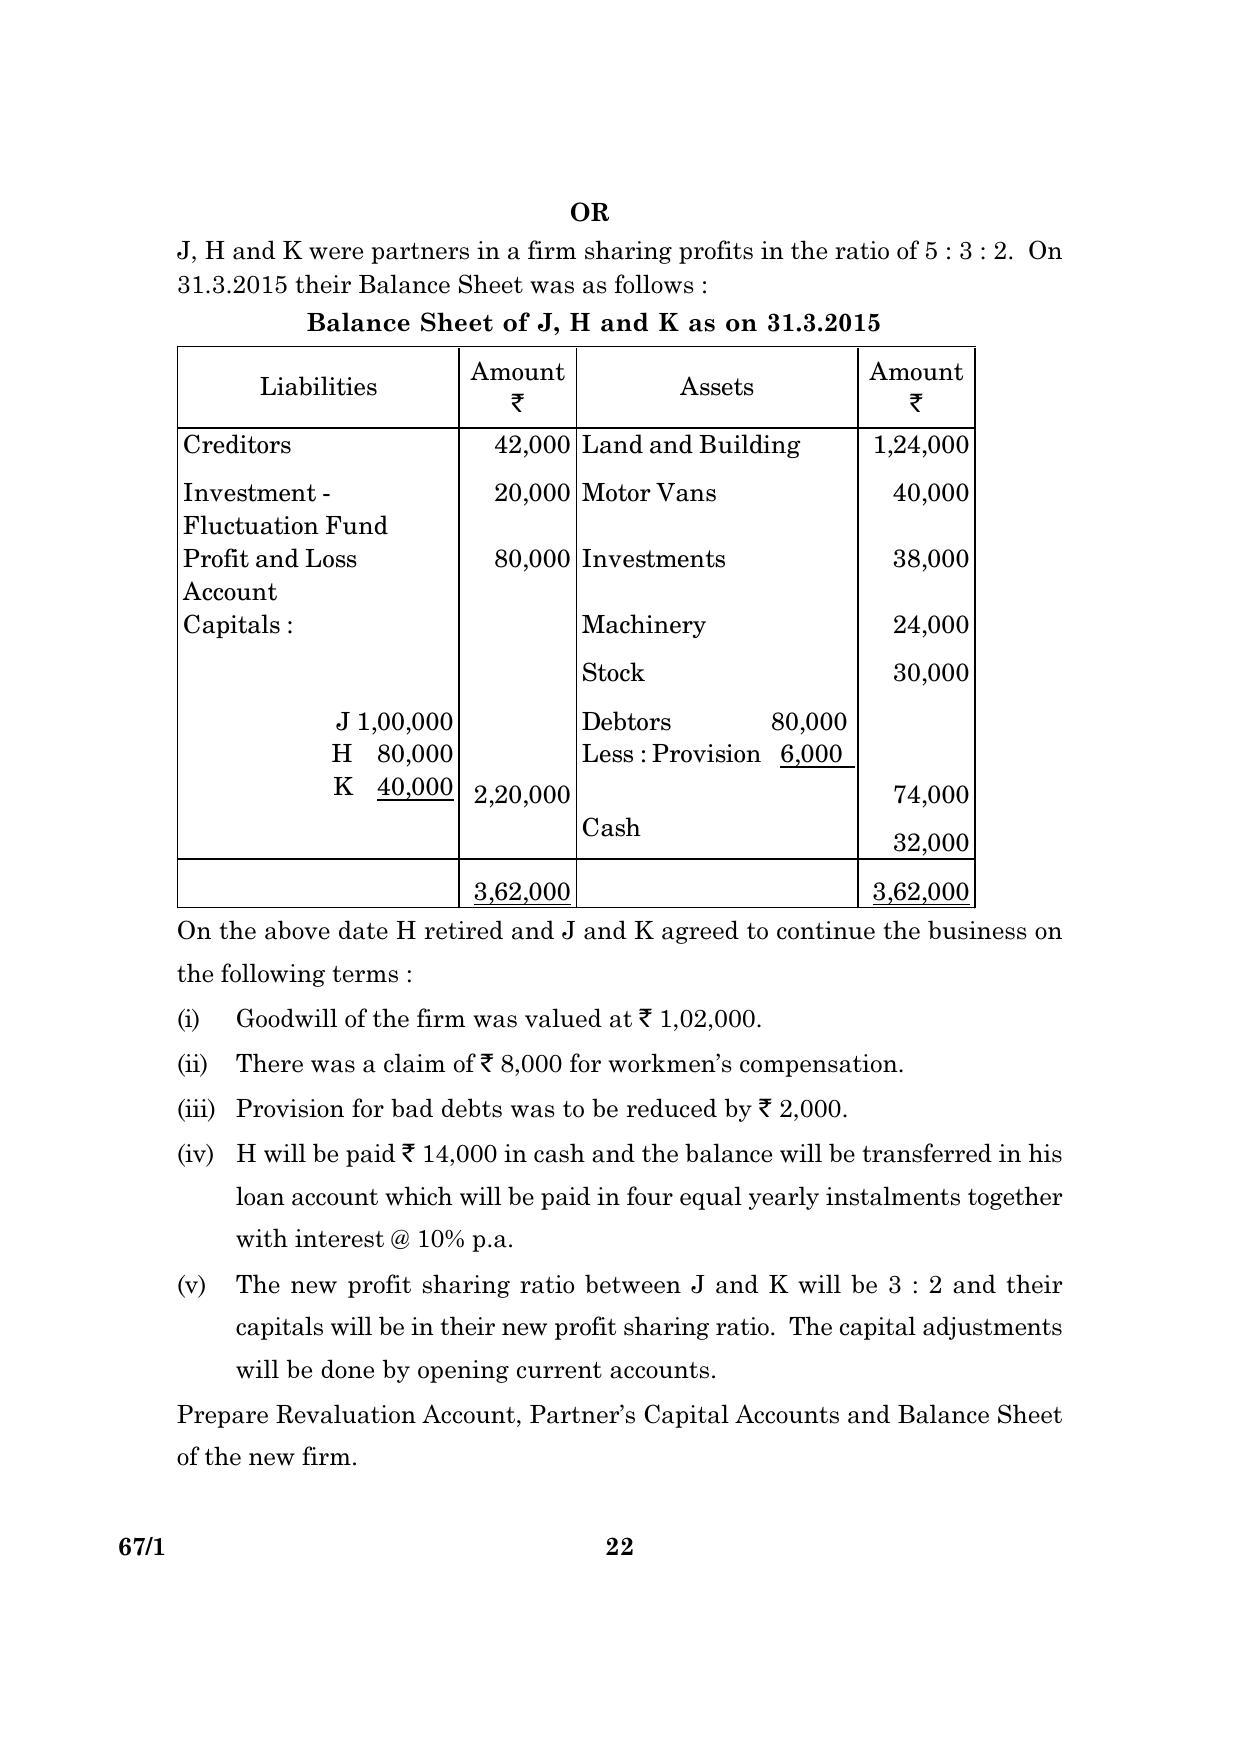 CBSE Class 12 067 Set 1 Accountancy 2016 Question Paper - Page 22